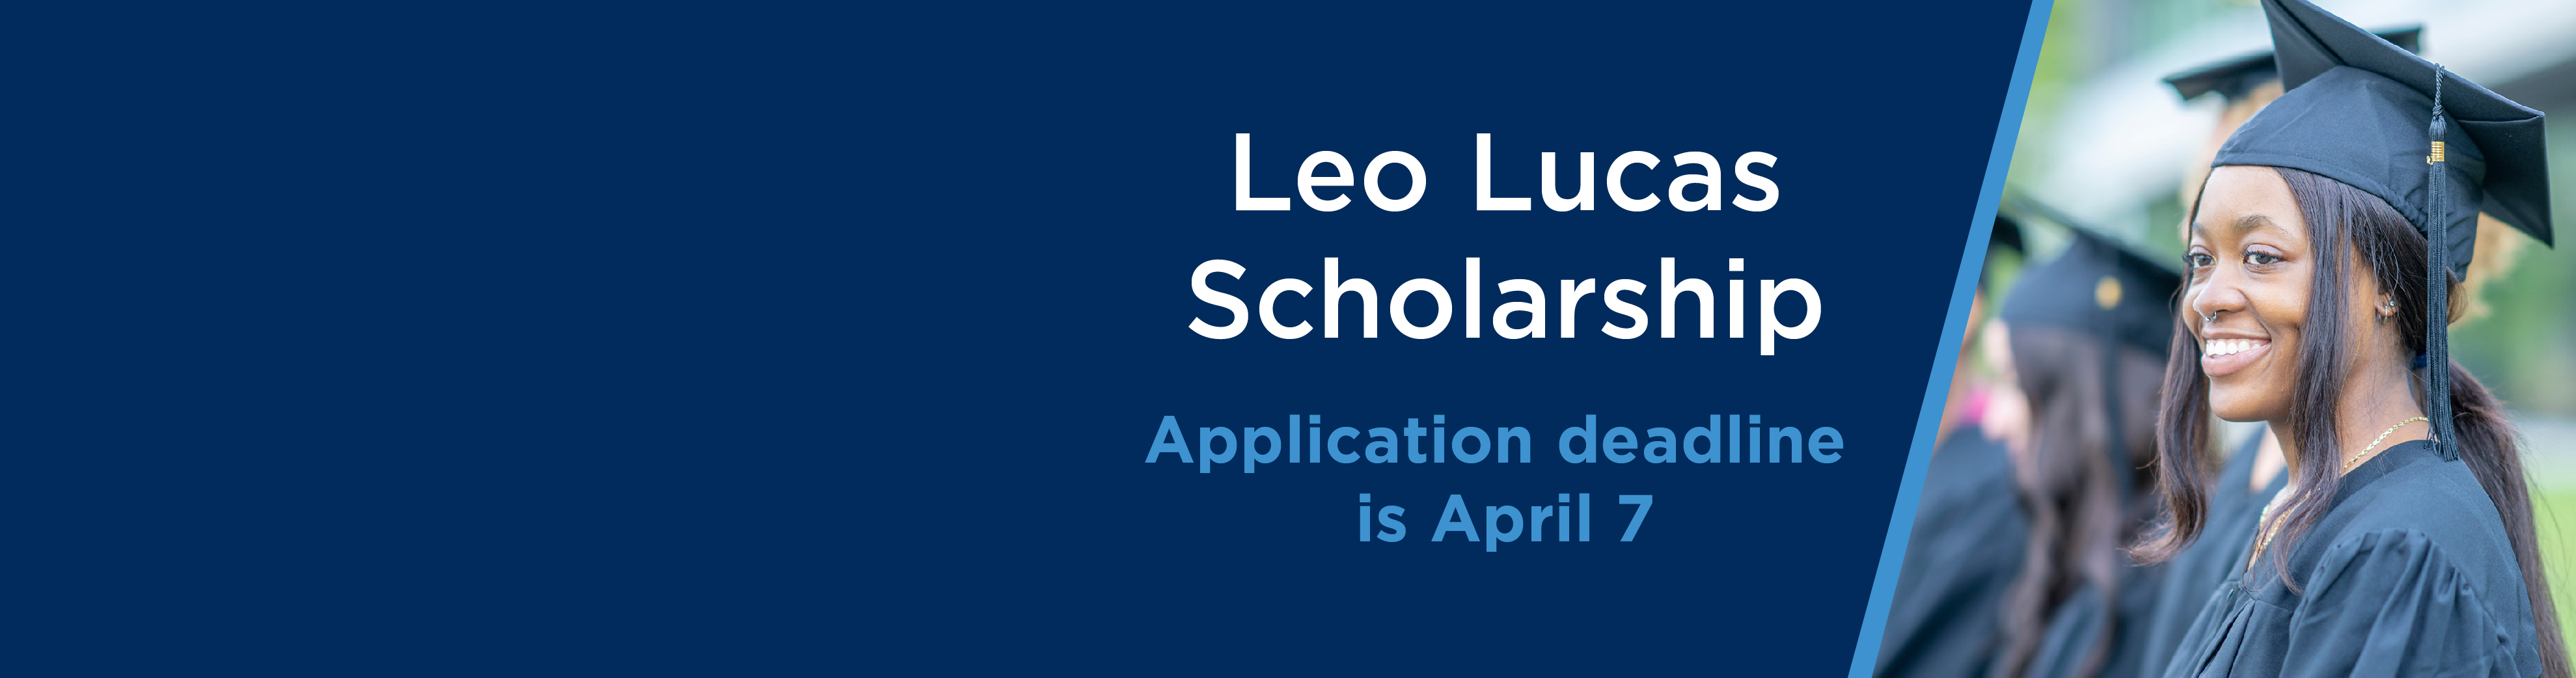 OSBA Leo Lucas Scholarship: Deadline is April 7